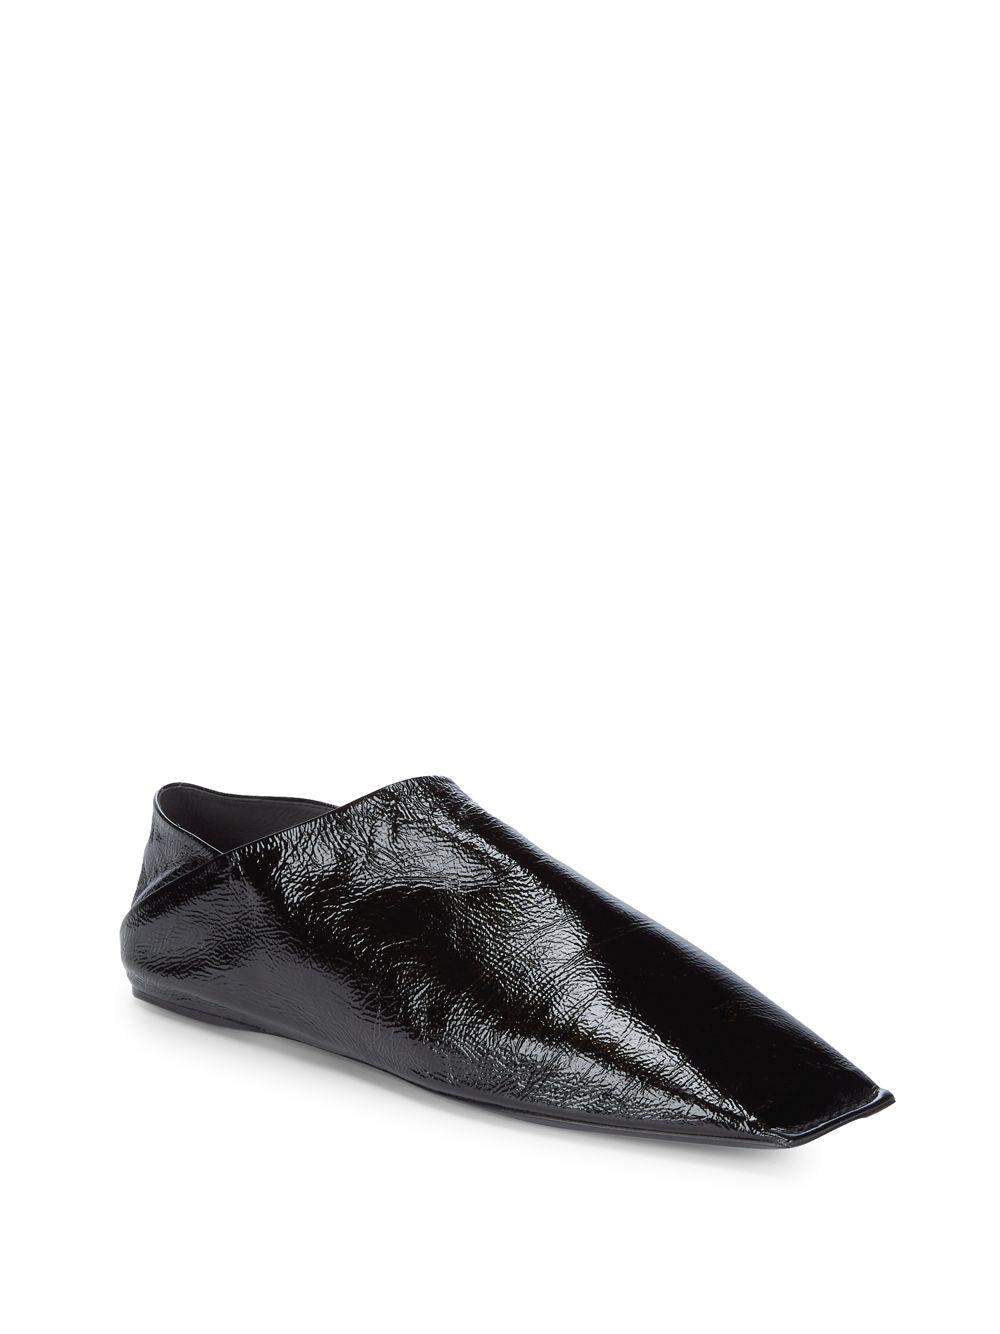 Balenciaga Square Toe Leather Flats in Black | Lyst Canada